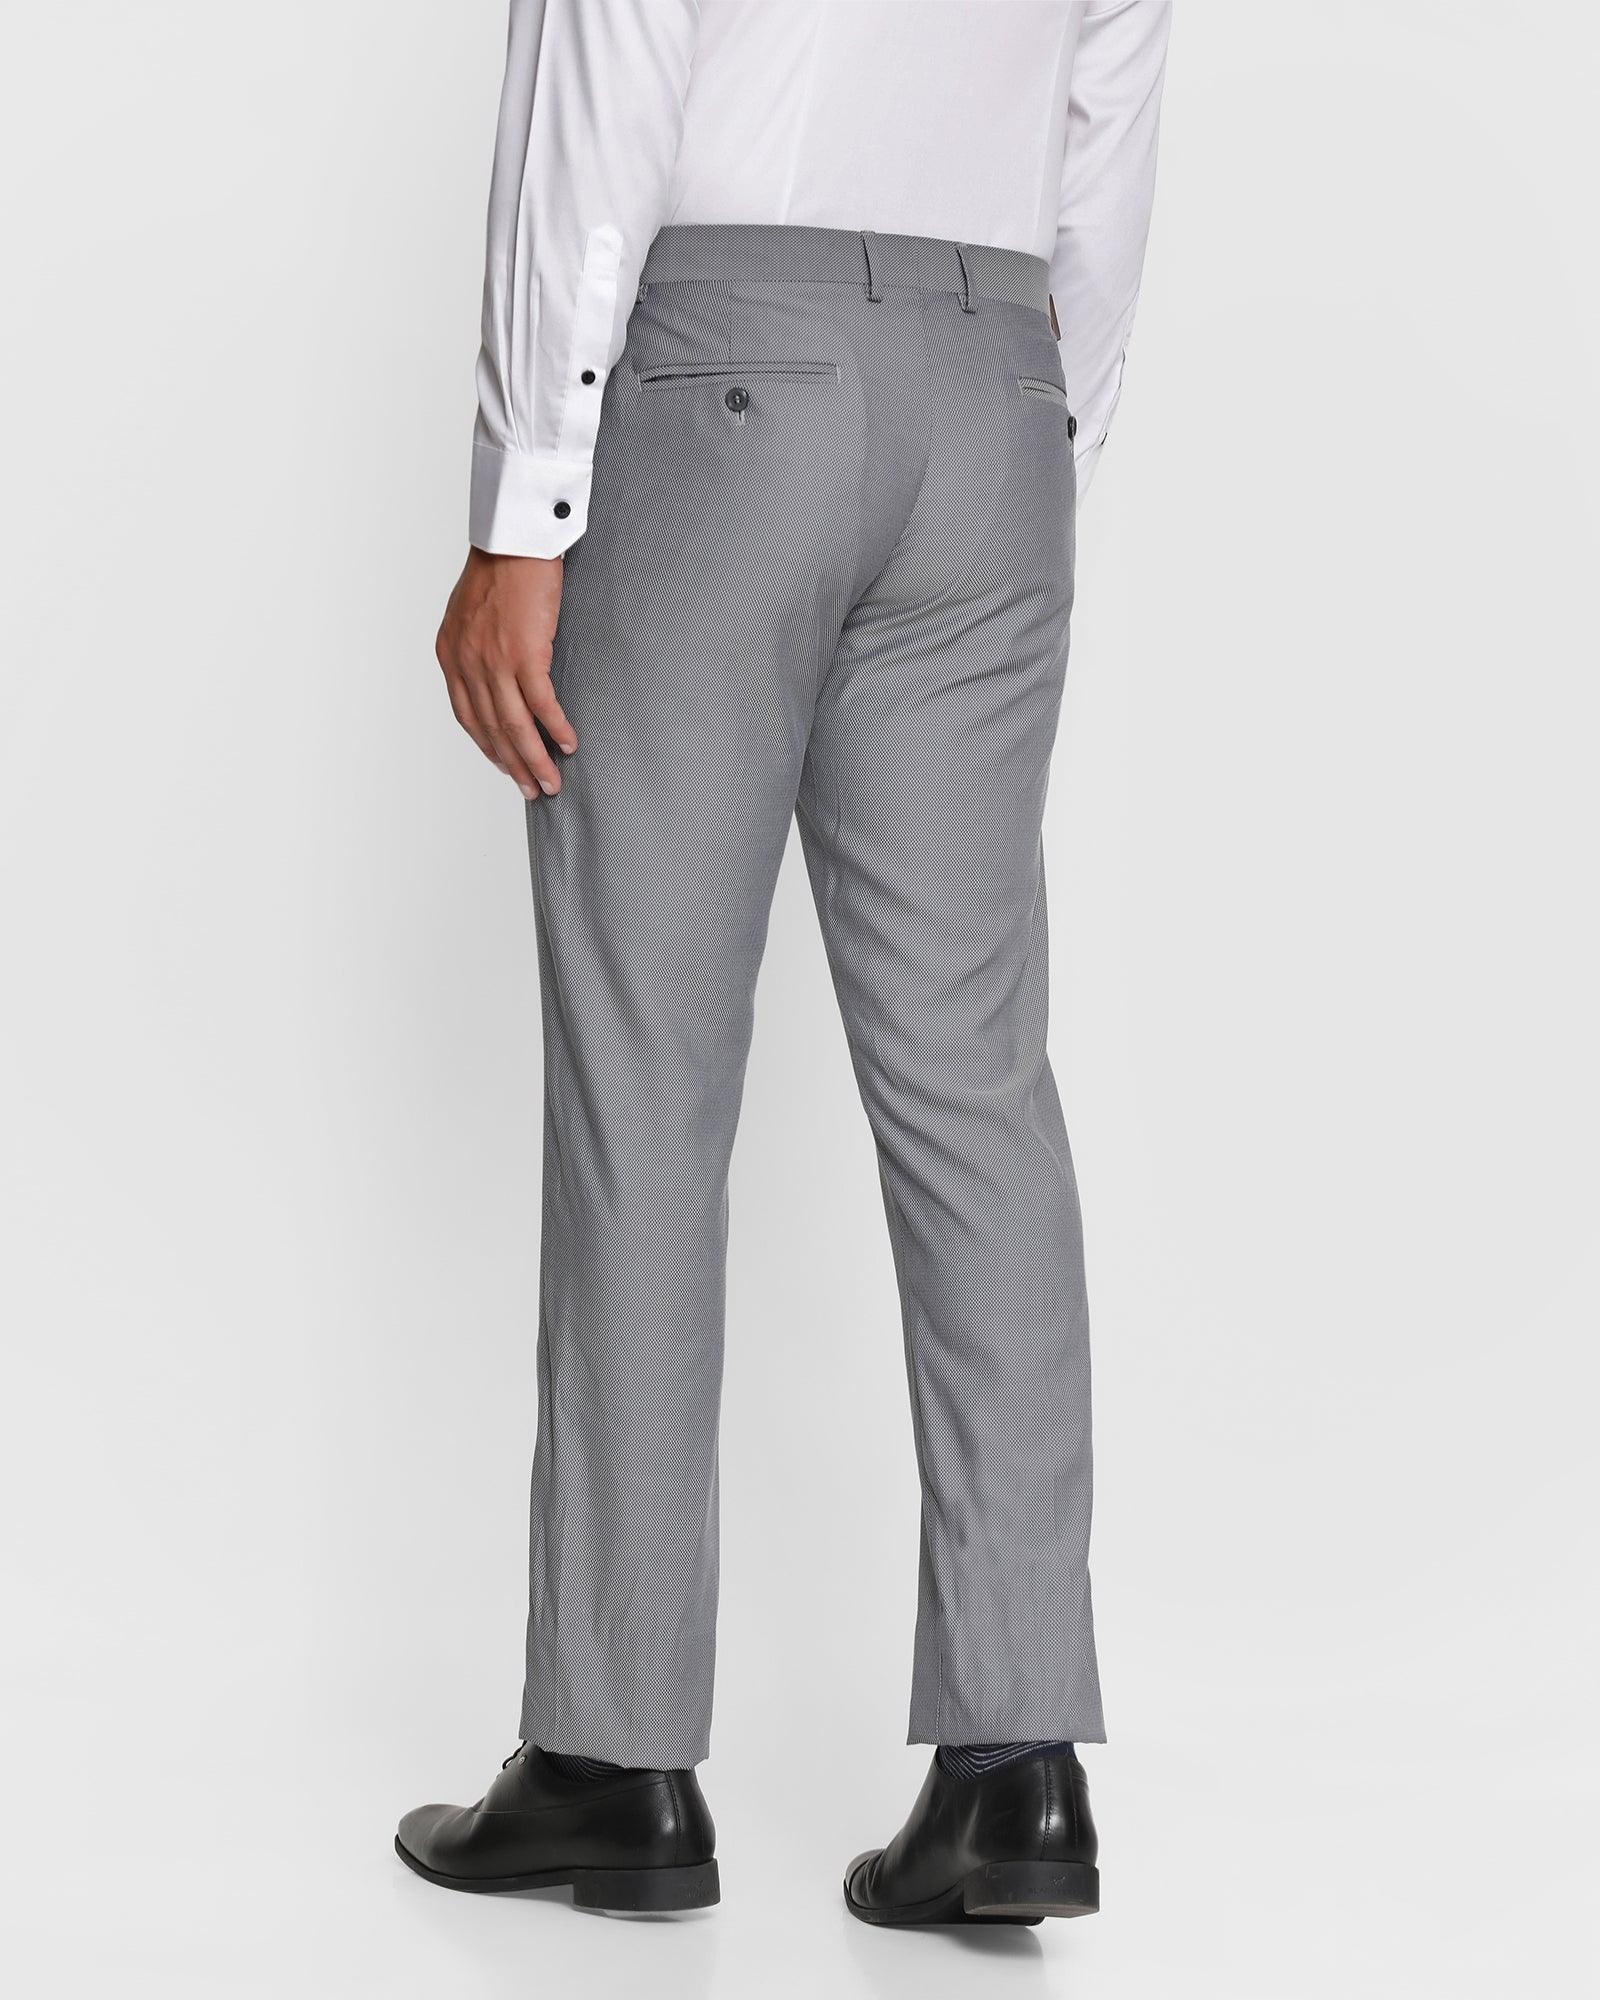 Slim Comfort B-95 Formal Light Grey Textured Trouser - Mandis